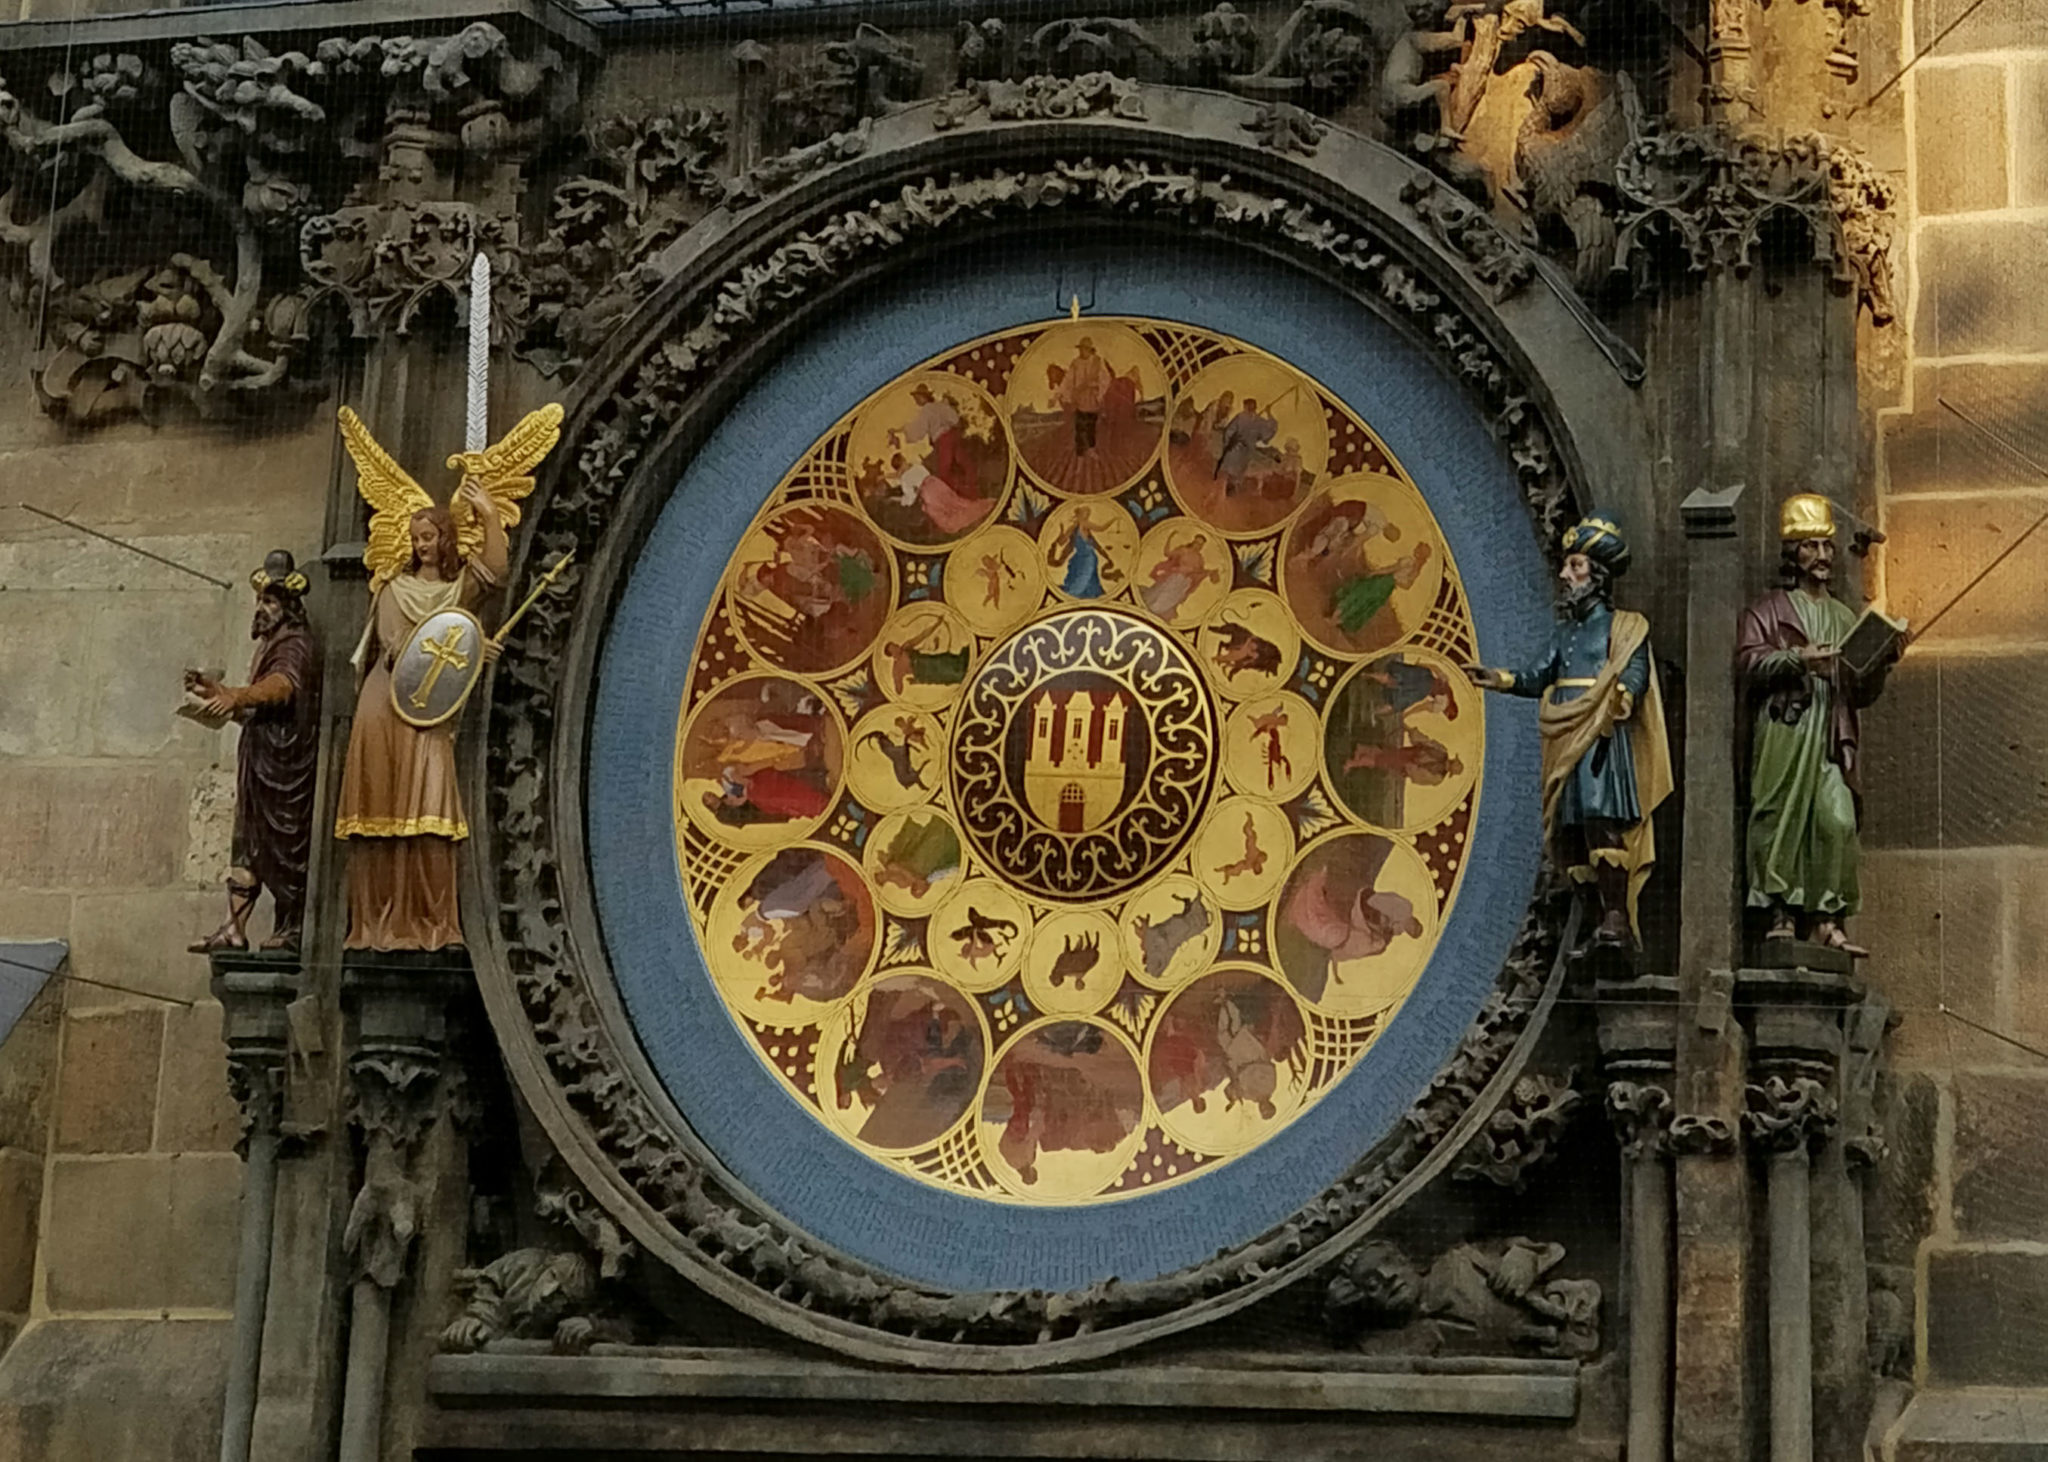 Astronomical Clock Post Restoration 2018 - Calendar Dial